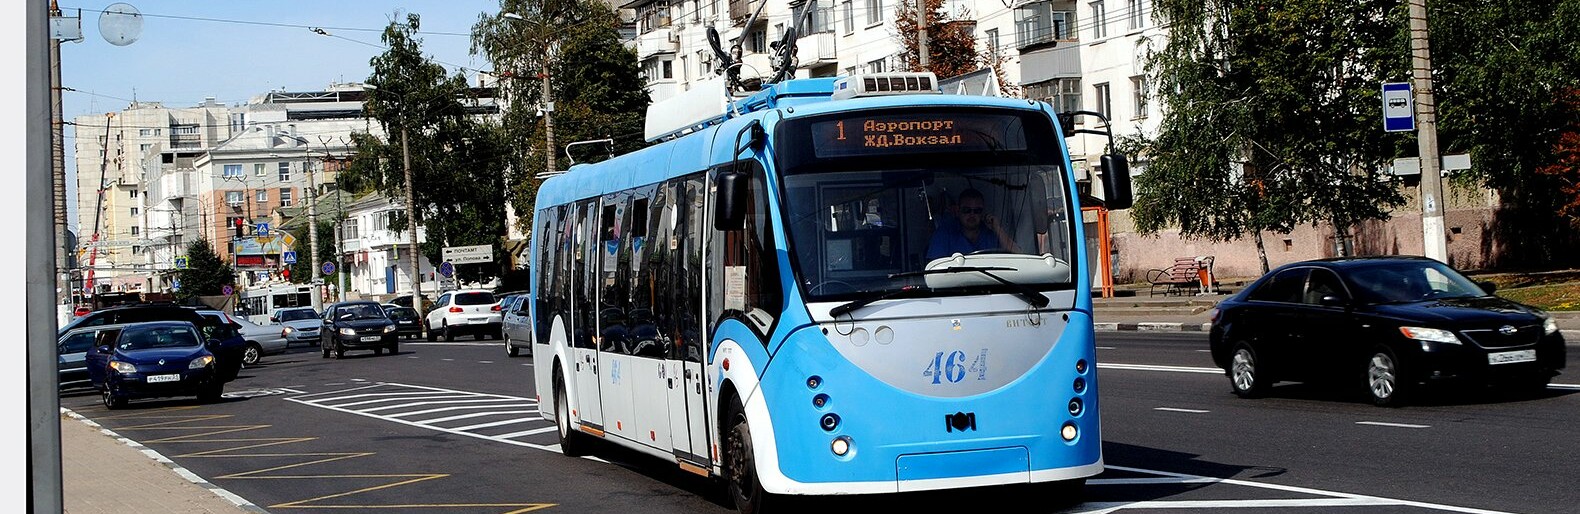 90 % сотрудников белгородского троллейбусного депо решили уволиться